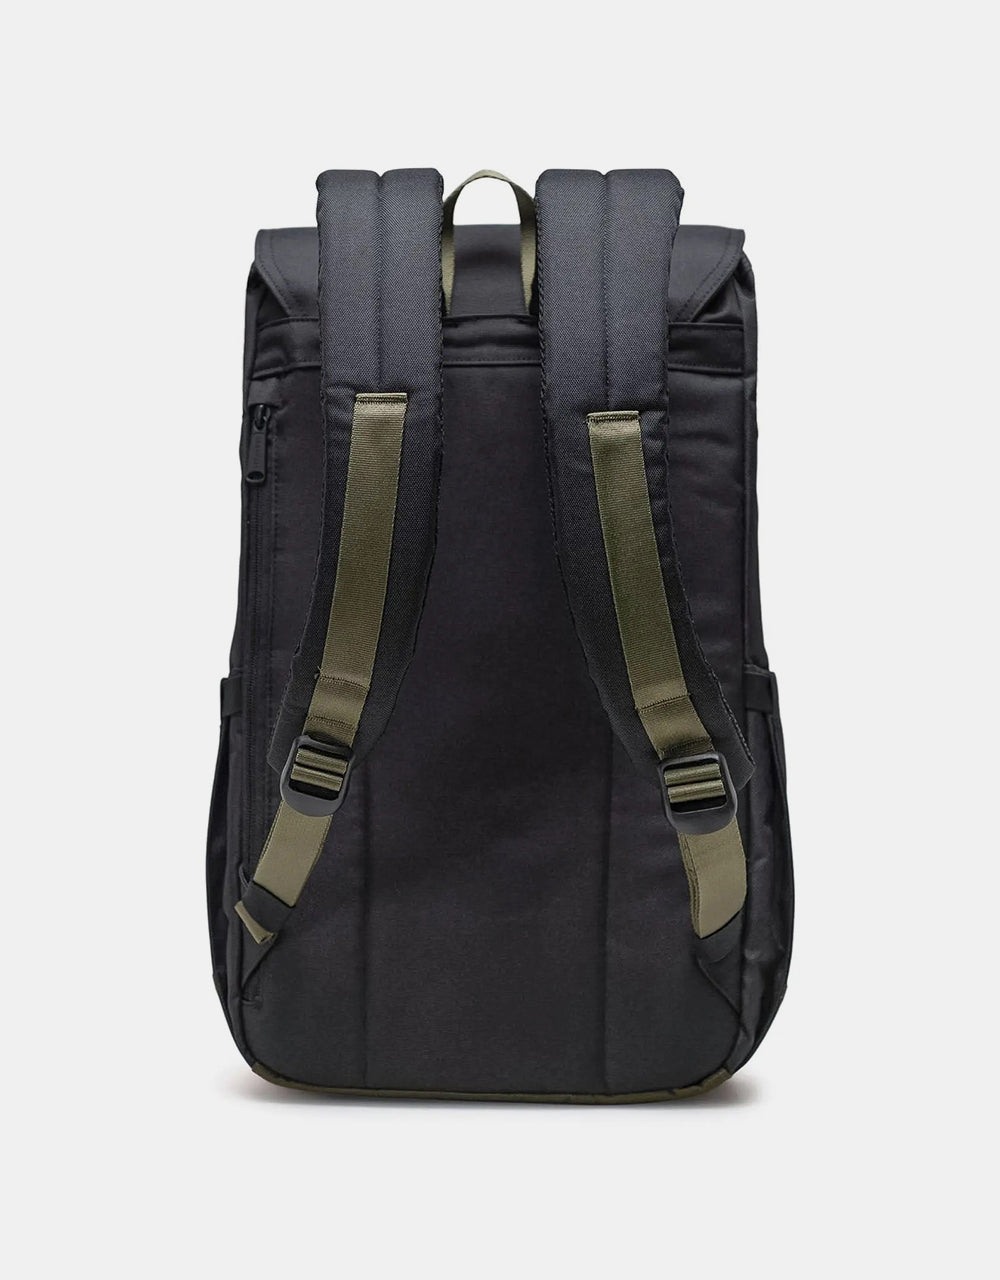 Herschel Supply Co. Retreat Backpack - Black/Ivy Green/Chutney